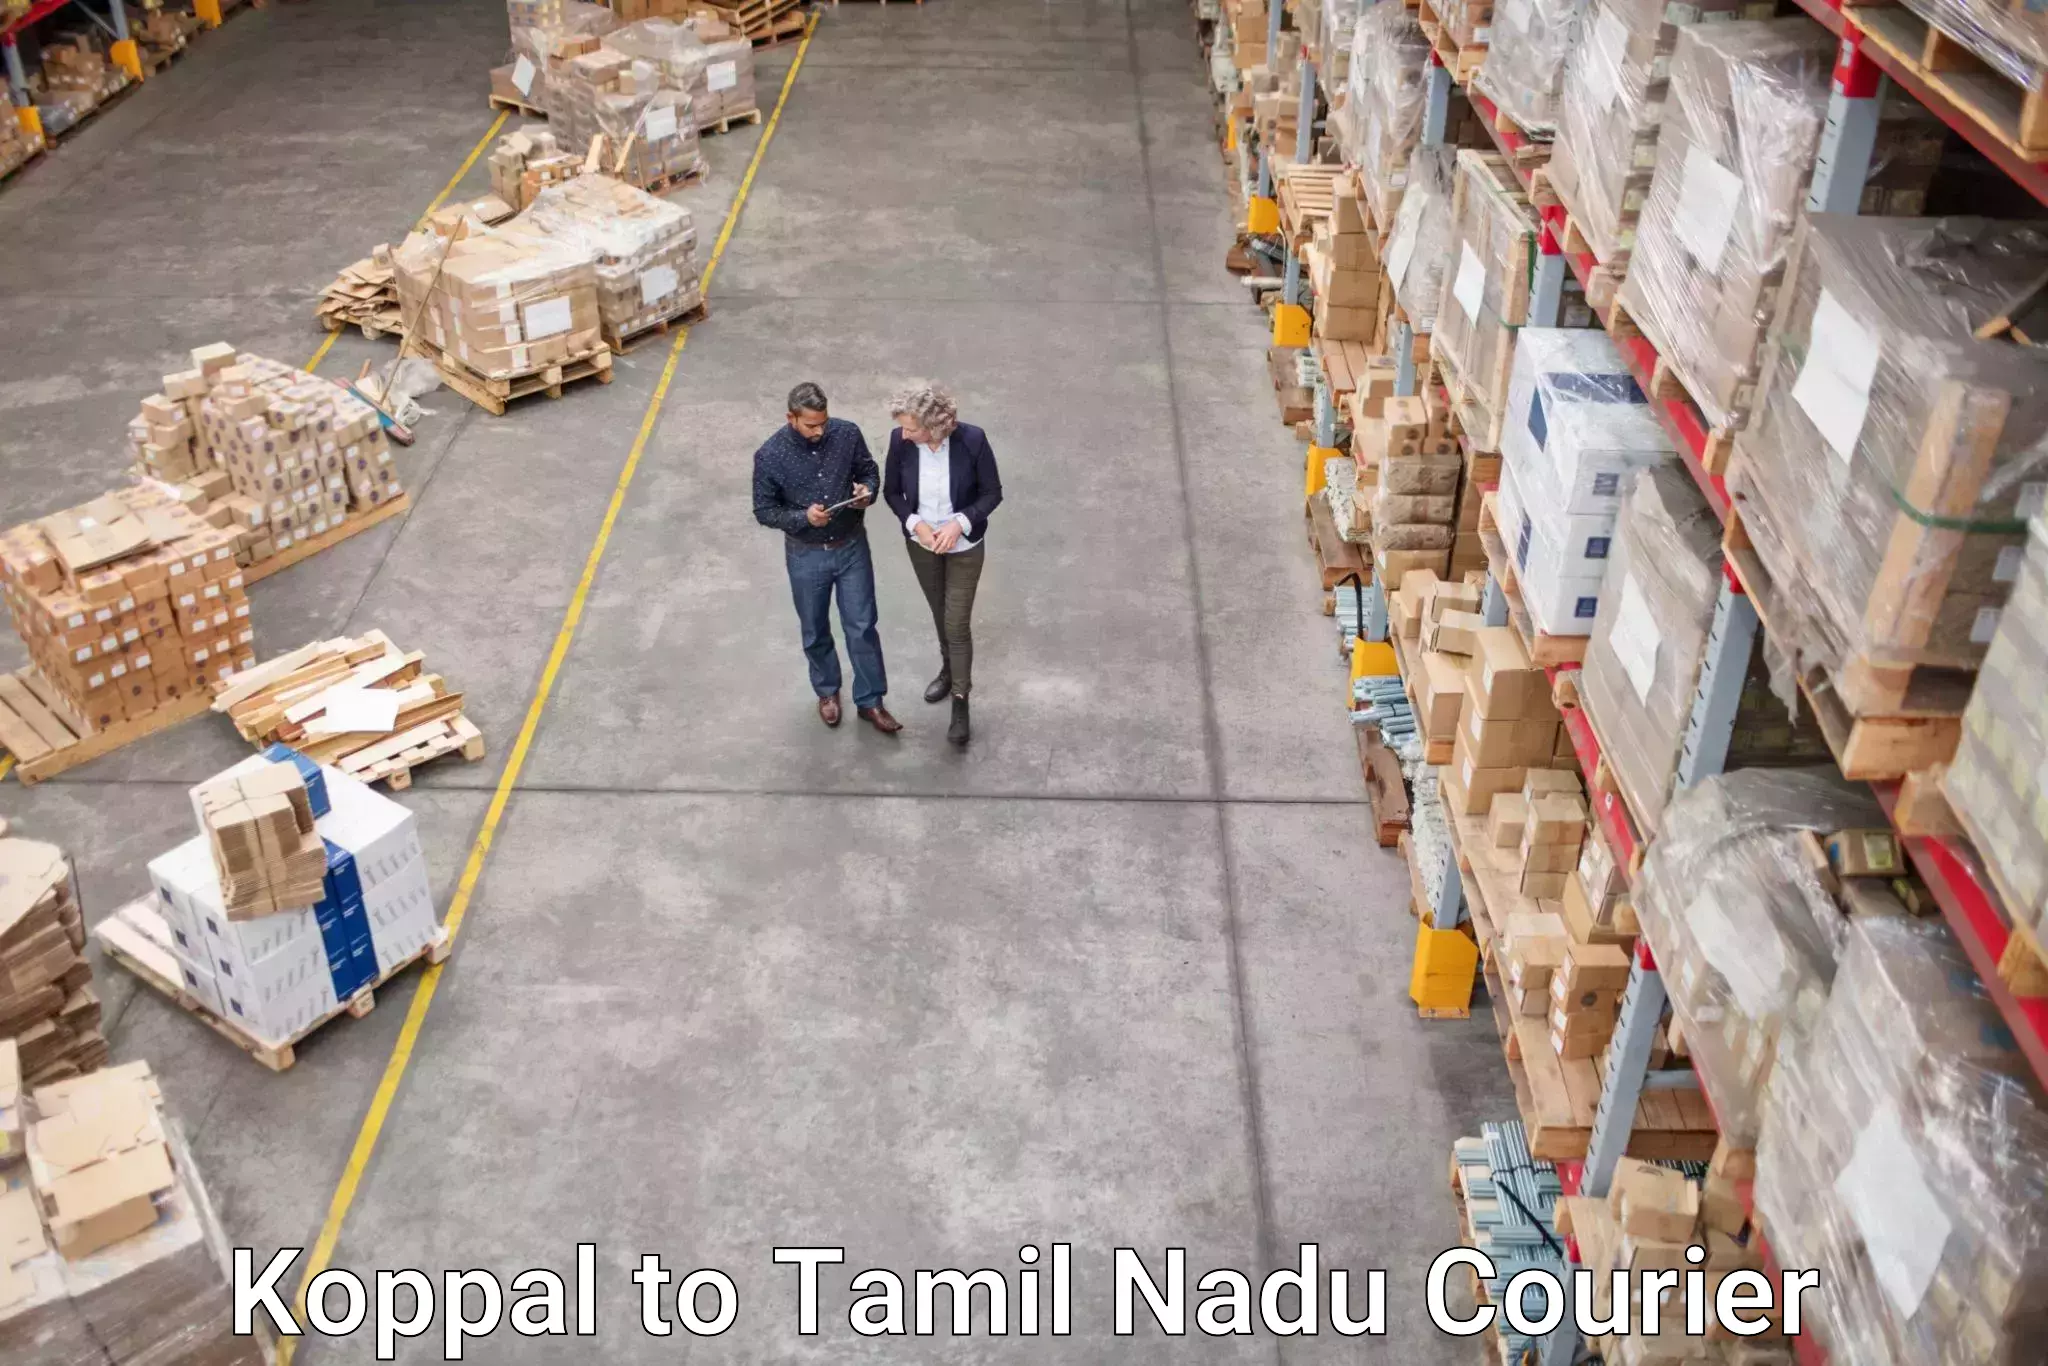 Courier service partnerships Koppal to Dindigul